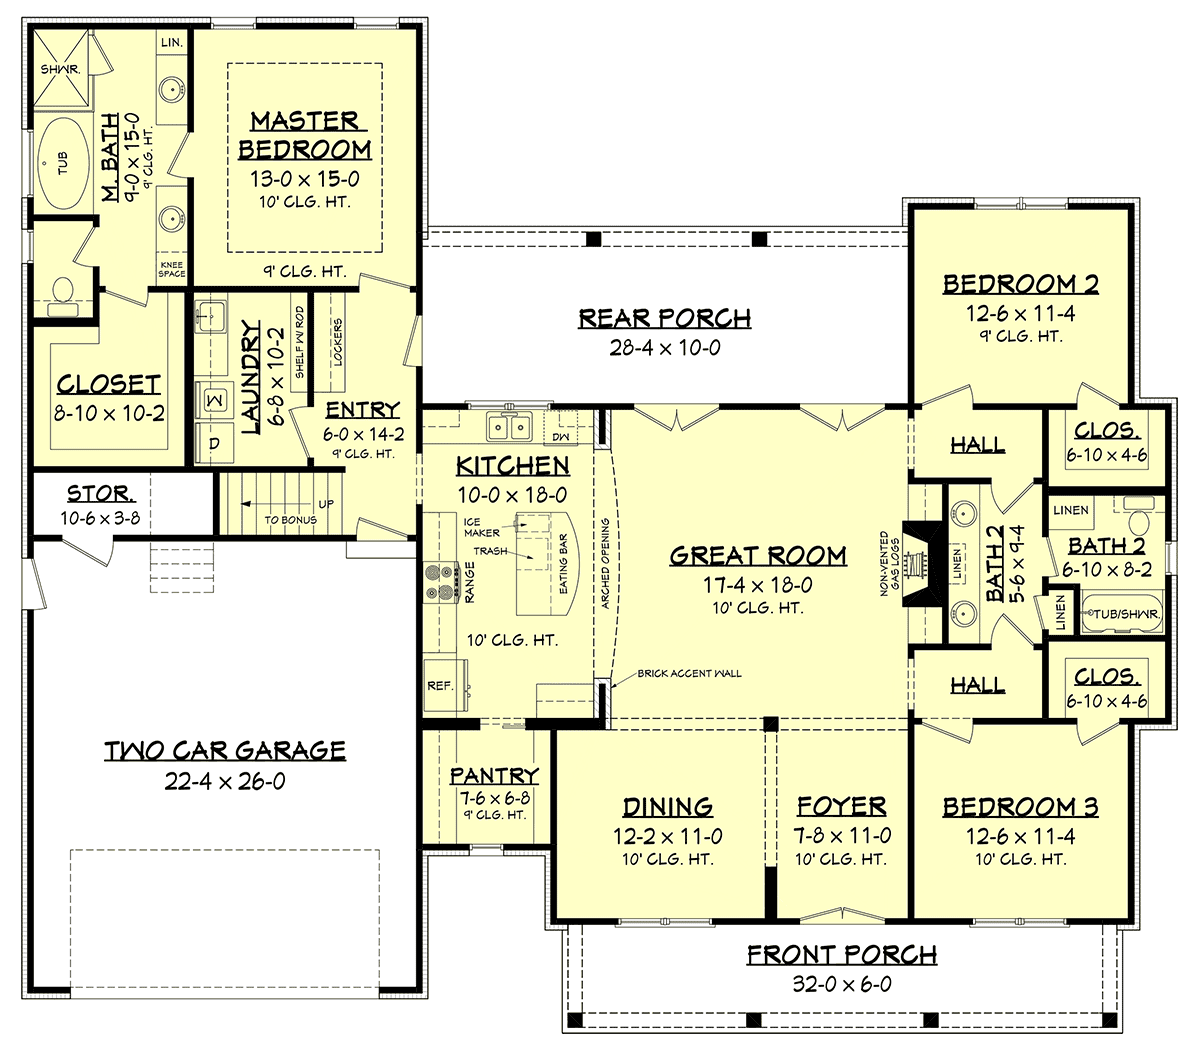 House Plan 56912 Alternate Level One